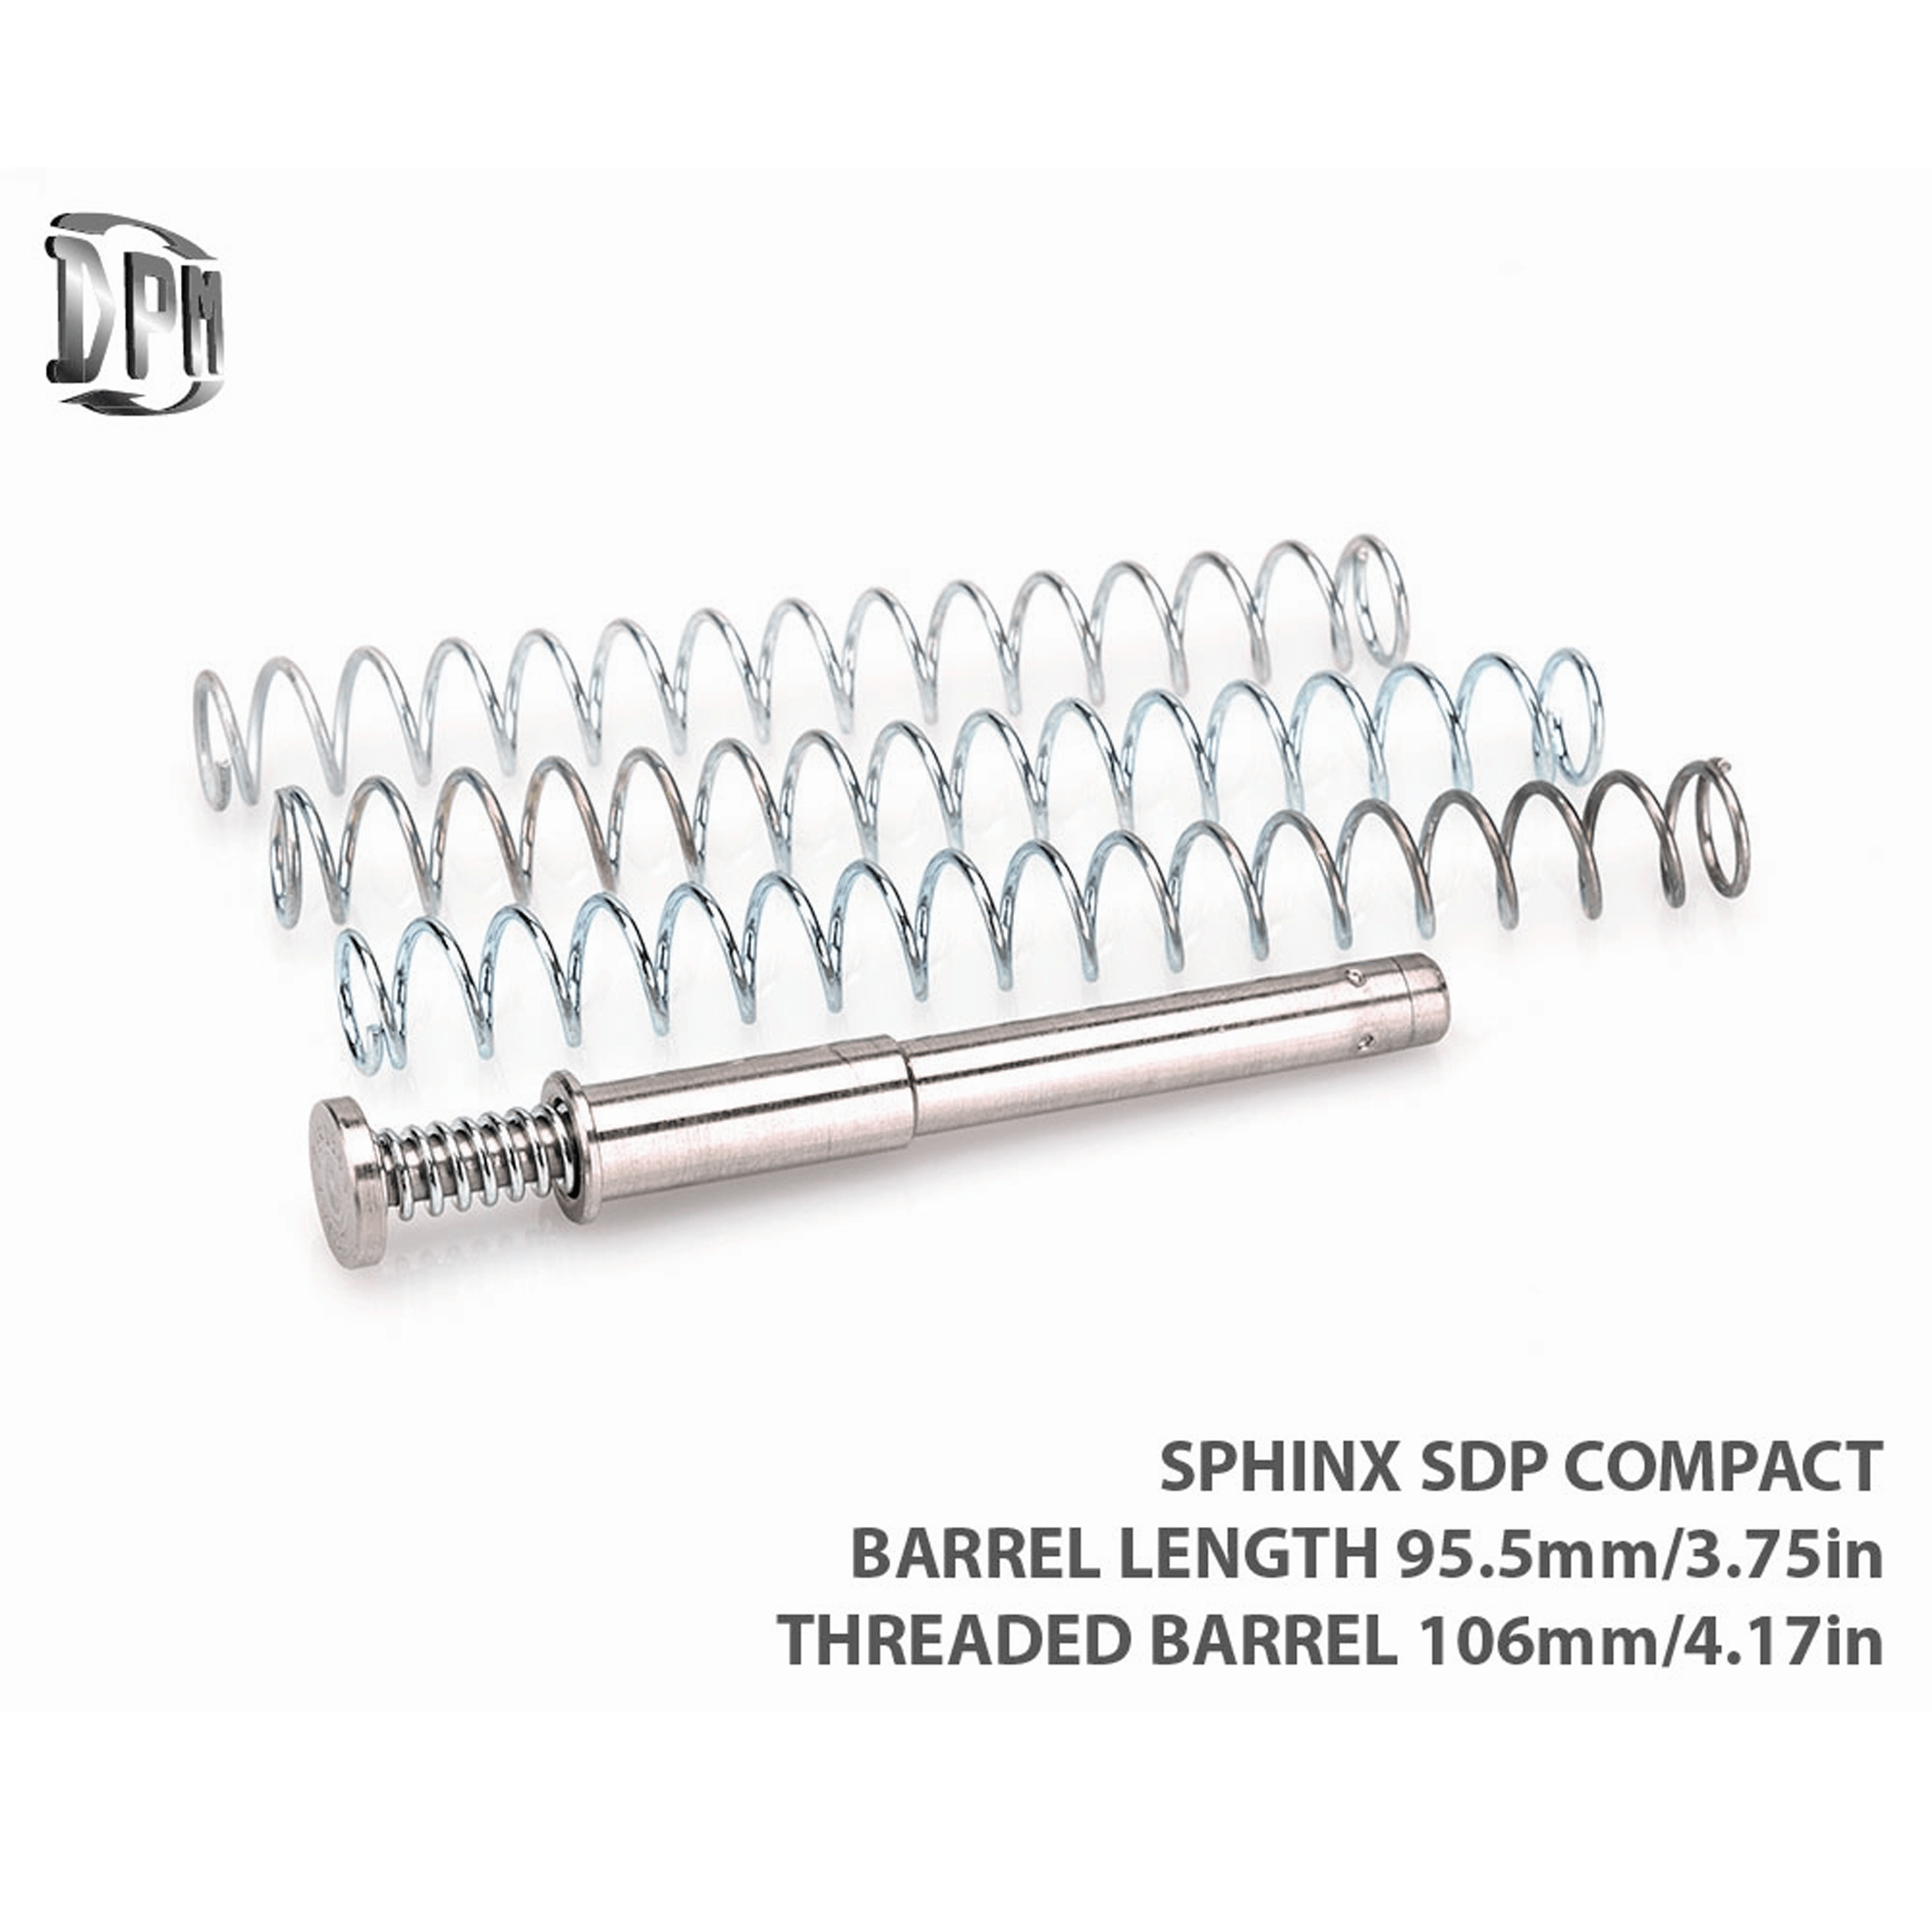 SPHINX SDP COMPACT Barrel